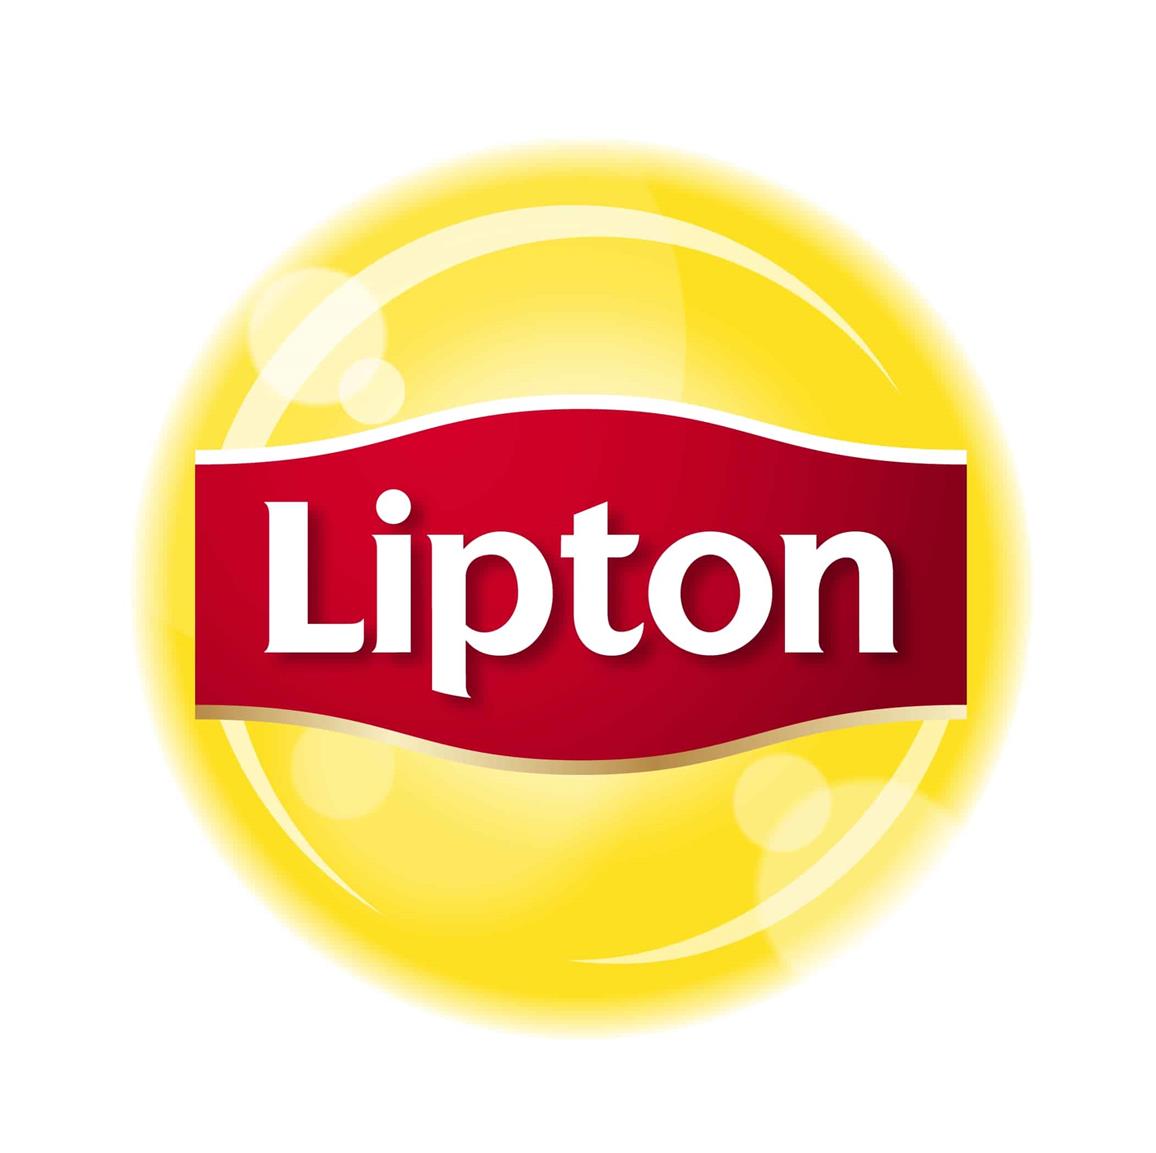 lipton logo